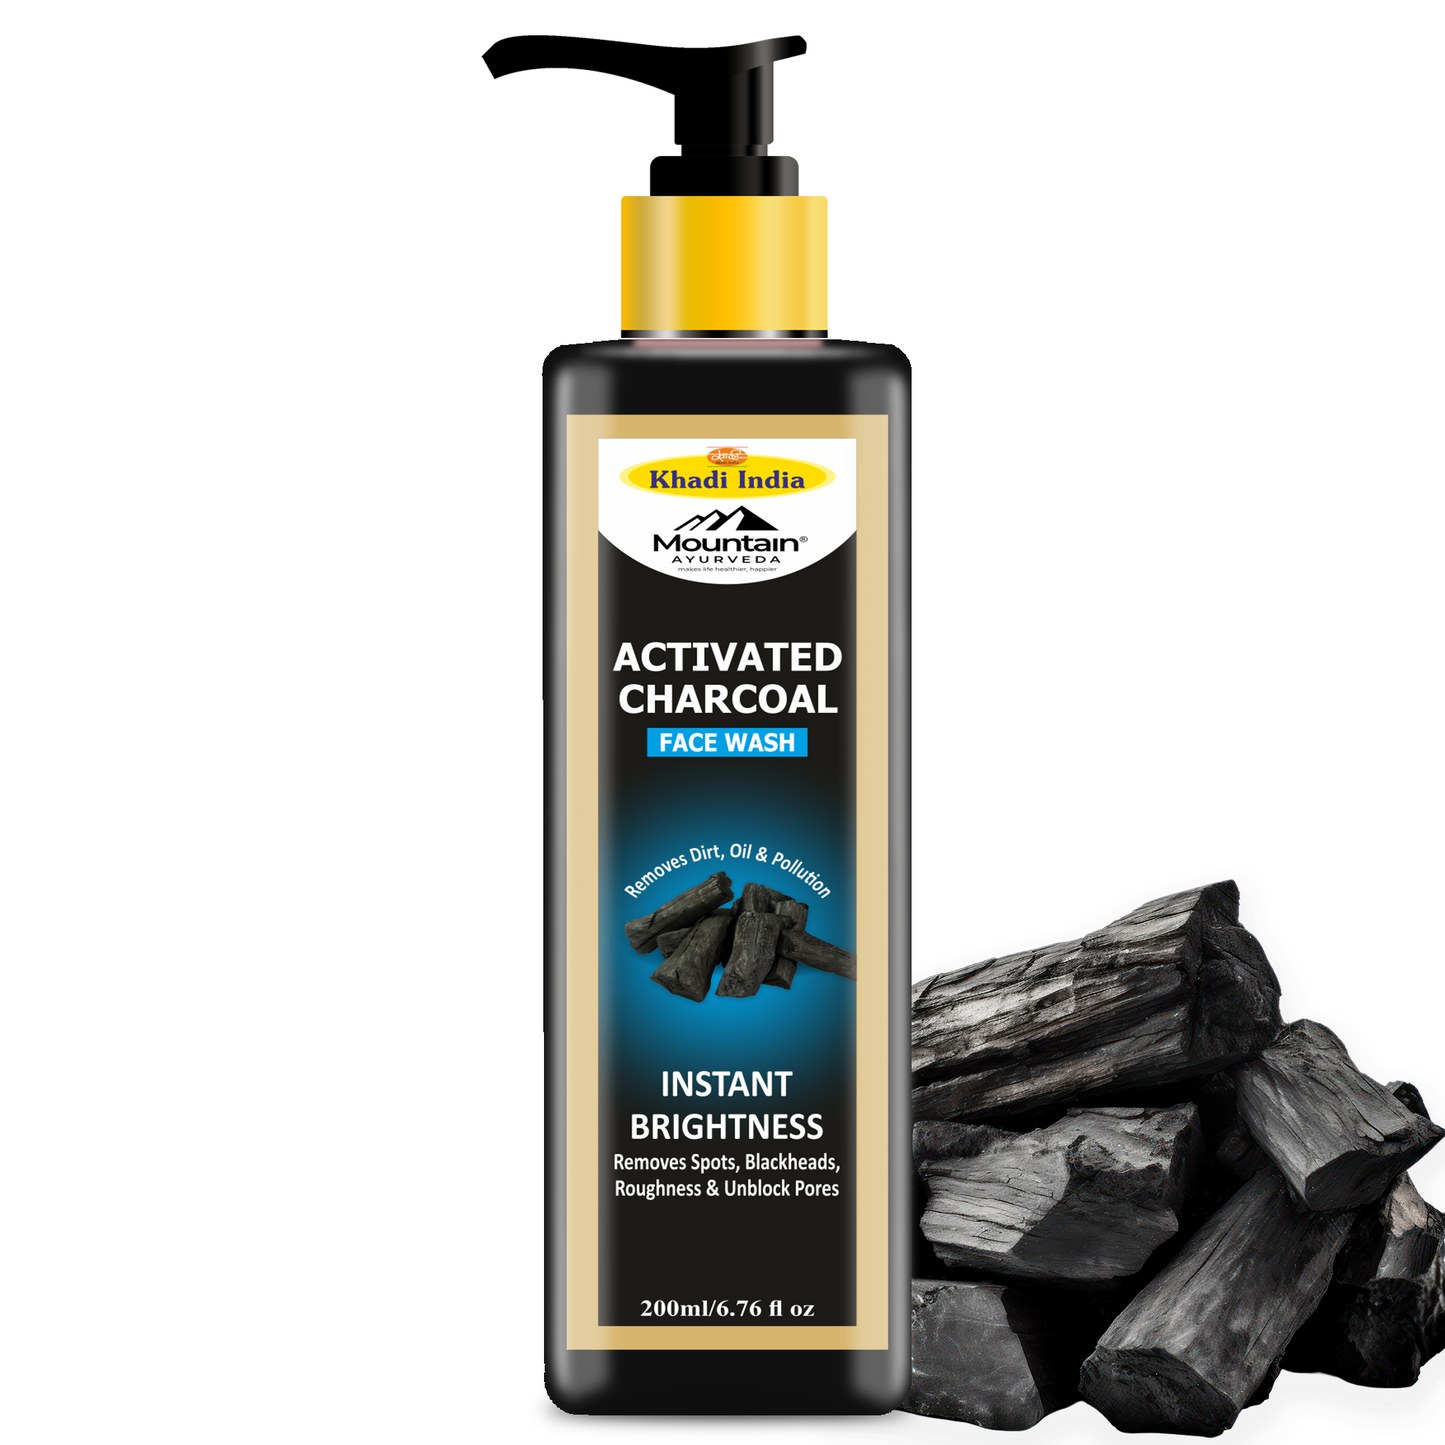 Mountain Ayurveda Charcoal Face Wash 200 ml